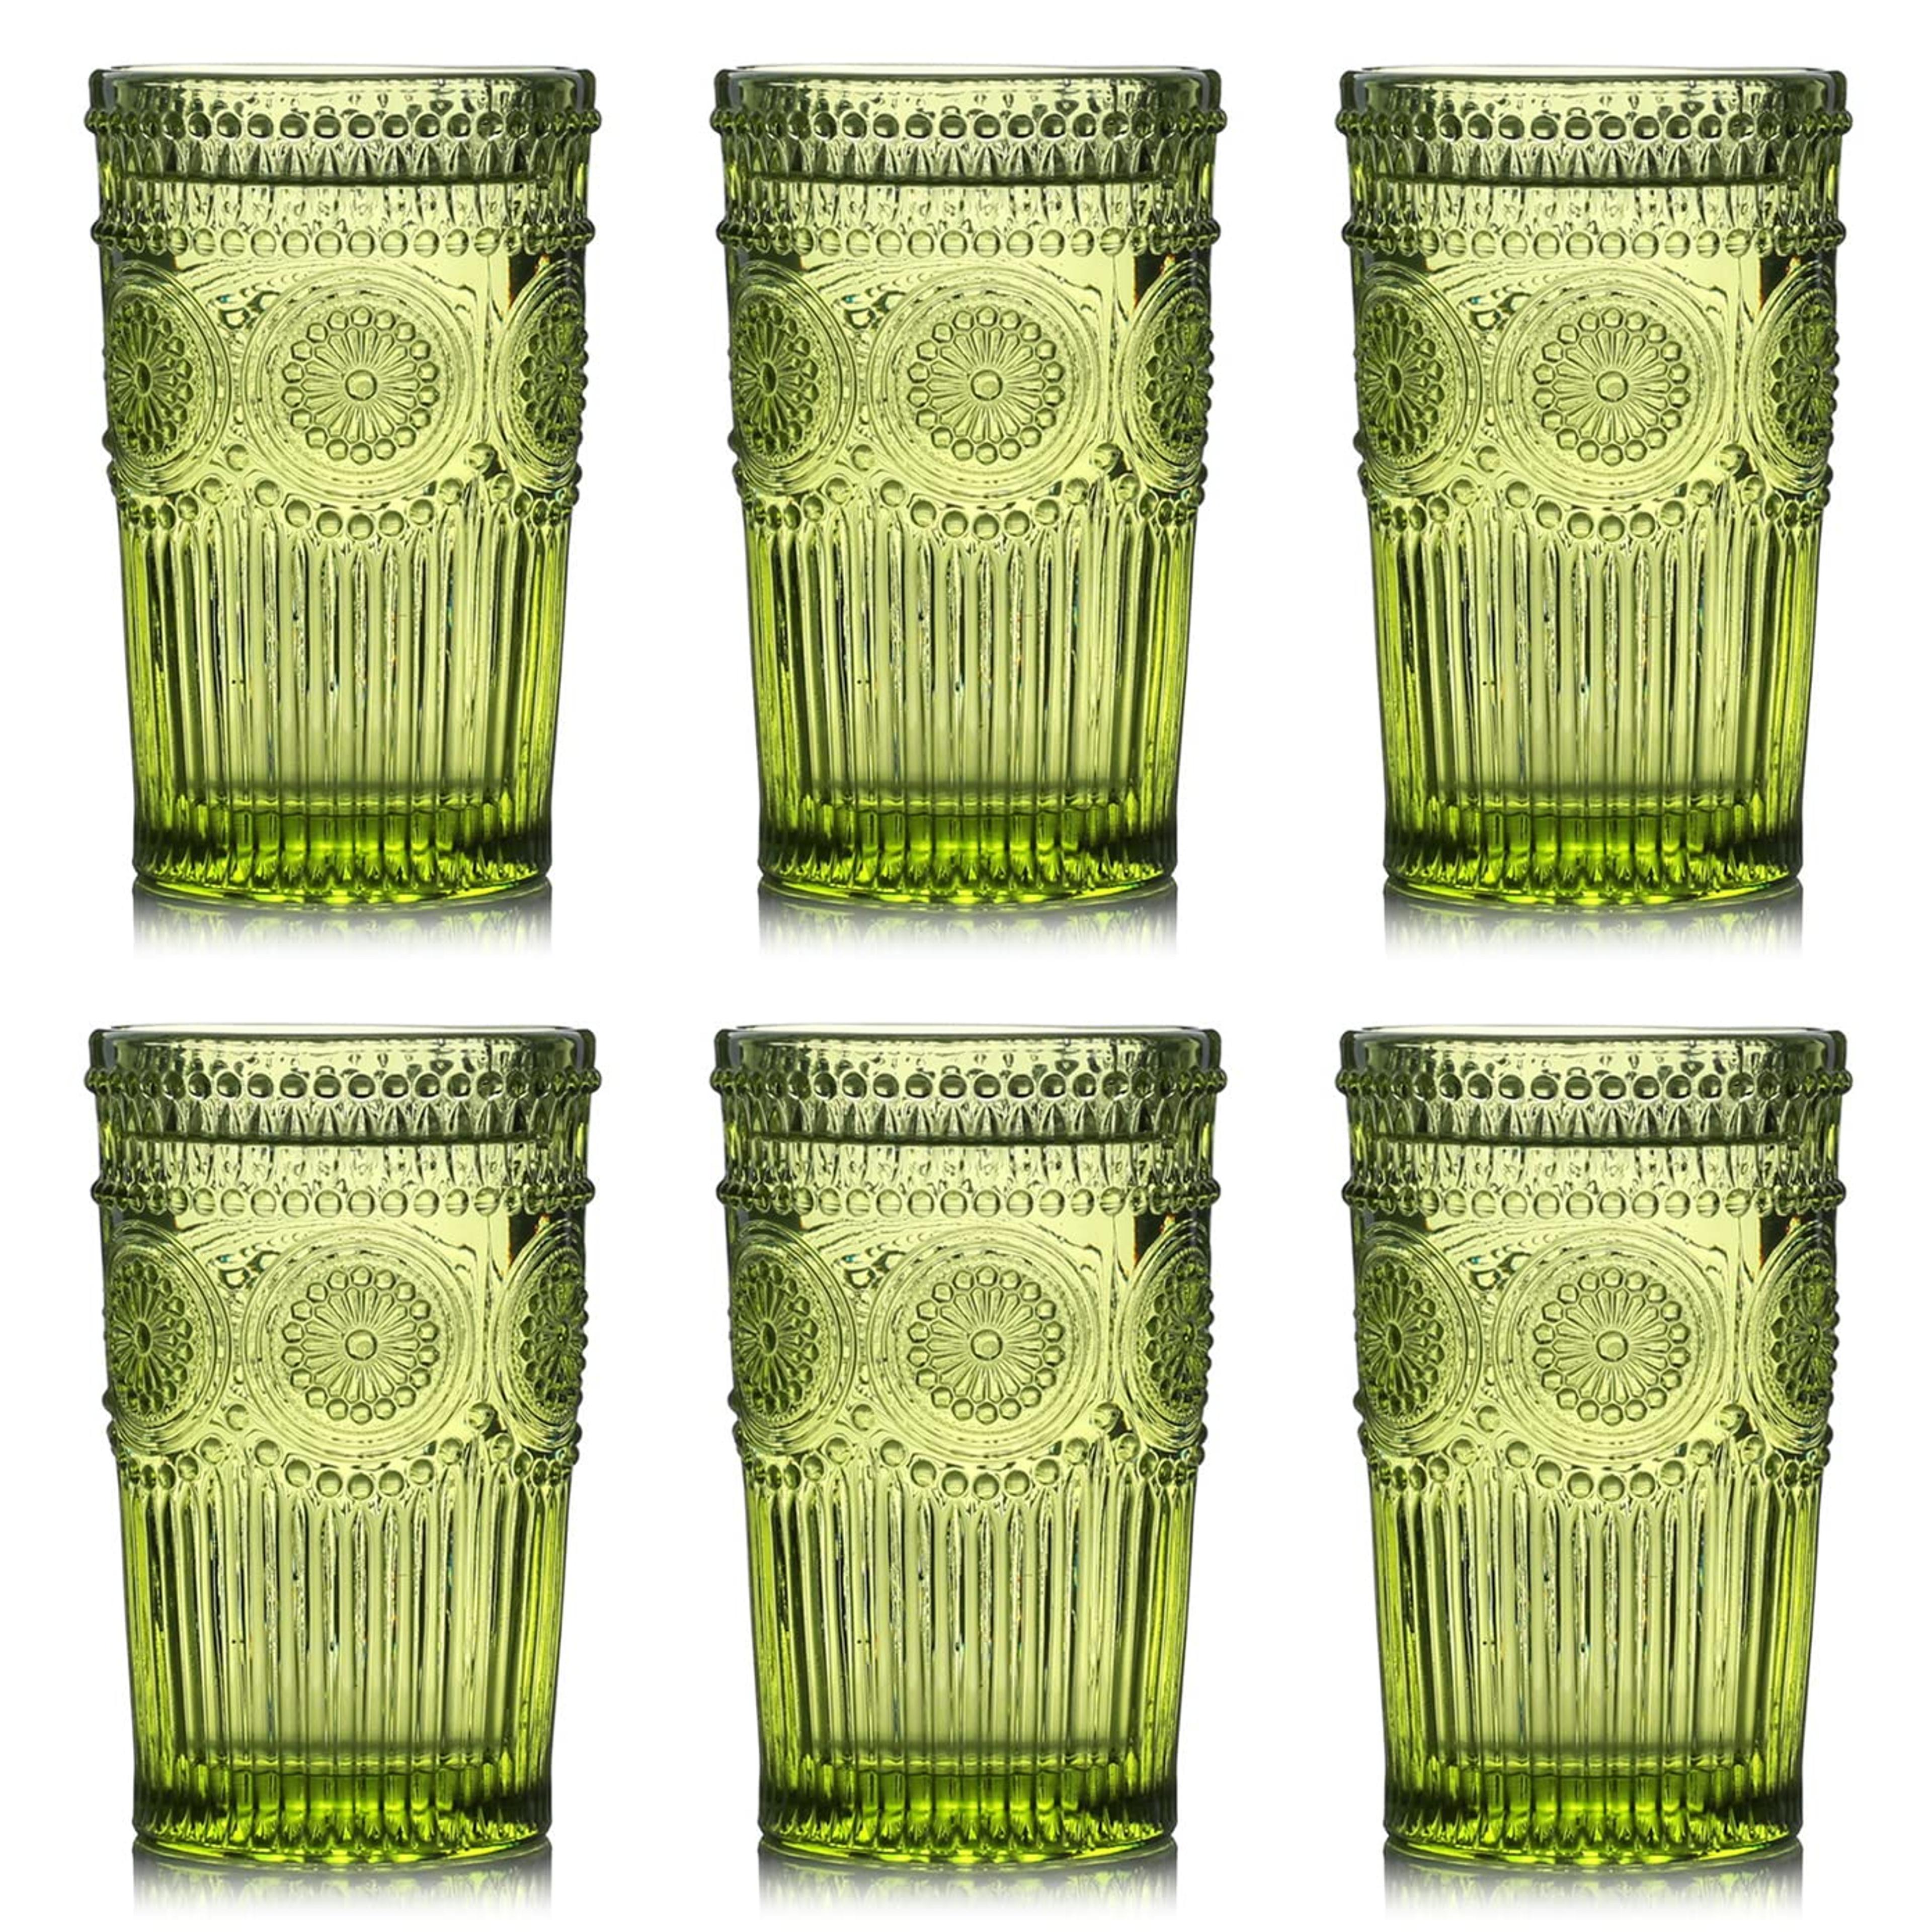 Kingrol 6 Pack 12 oz Vintage Drinking Glasses, Embossed Romantic Water Glassware, Glass Tumbler Set for Juice, Beverages, Beer, Cocktail (Green)